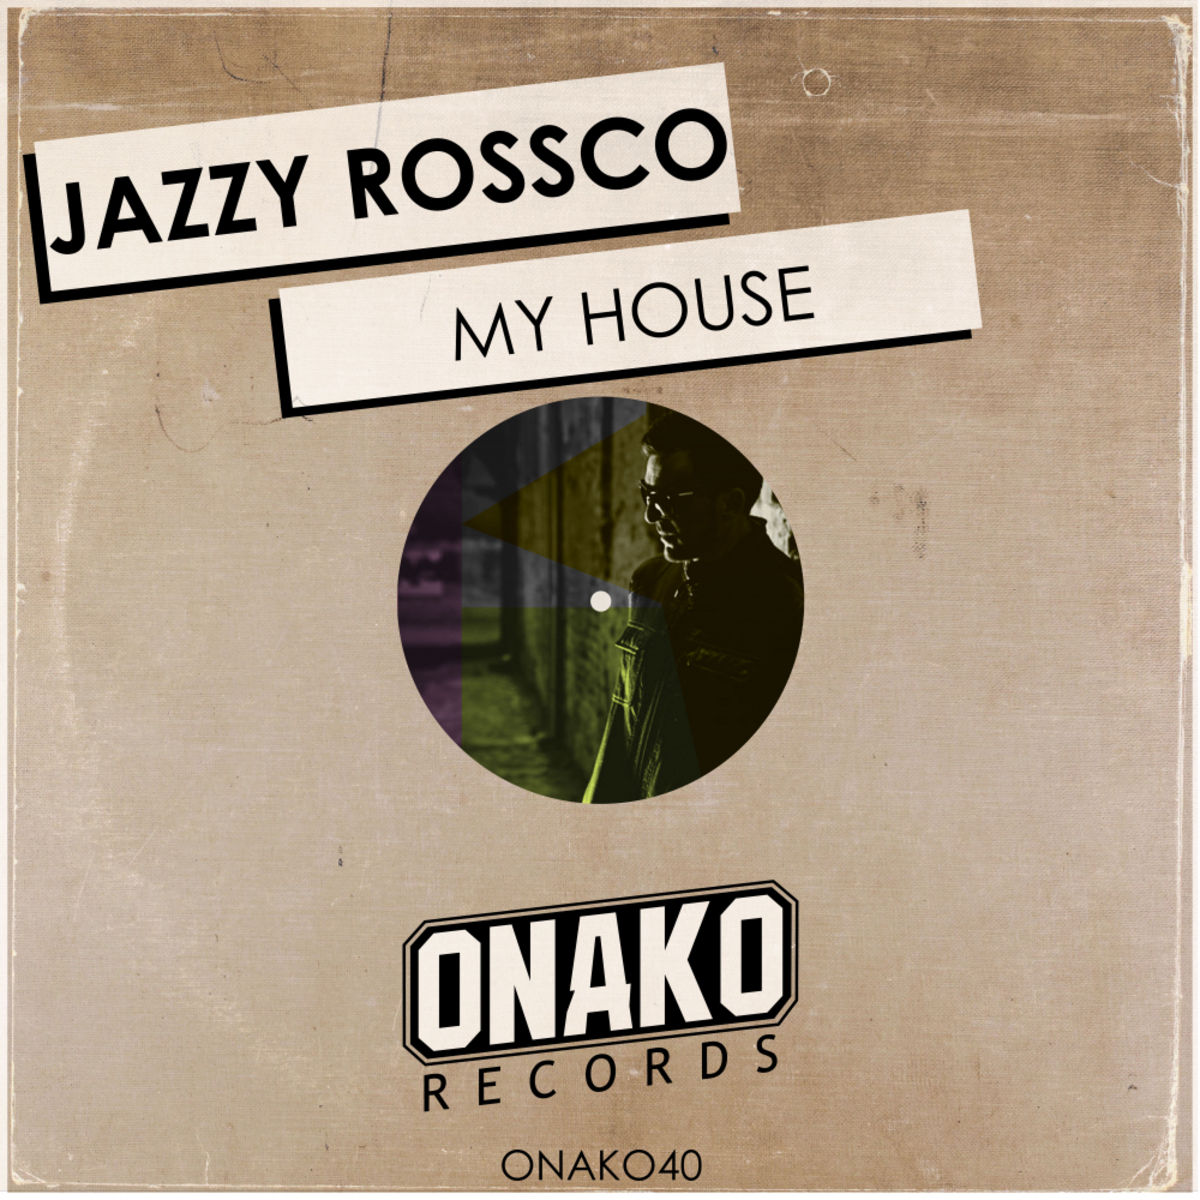 Jazzy Rossco - My House / Onako Records